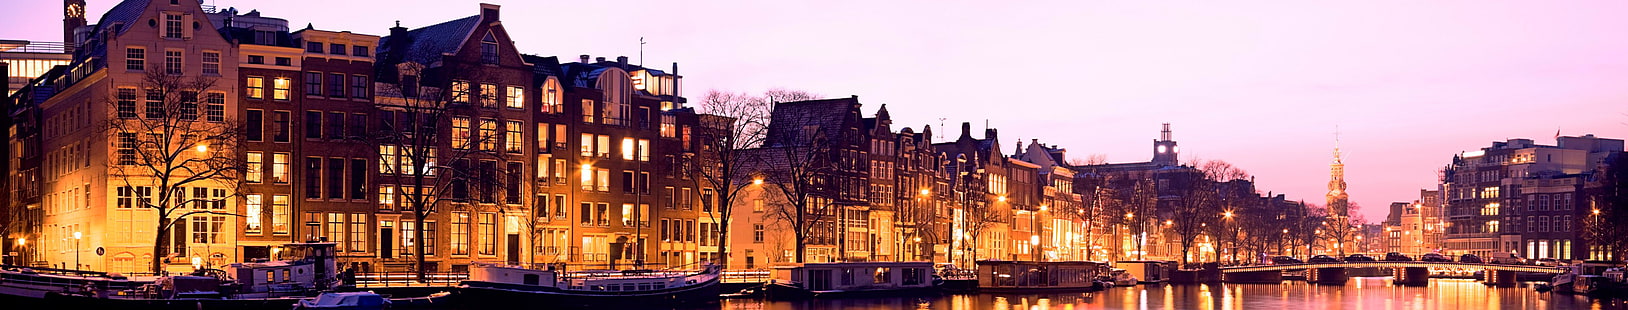 панорамное фото коричневых зданий, канал, улица, город, огни, вечер, дом, деревья, лодка, башня, голландия, нидерланды, панорама, европа, HD обои HD wallpaper